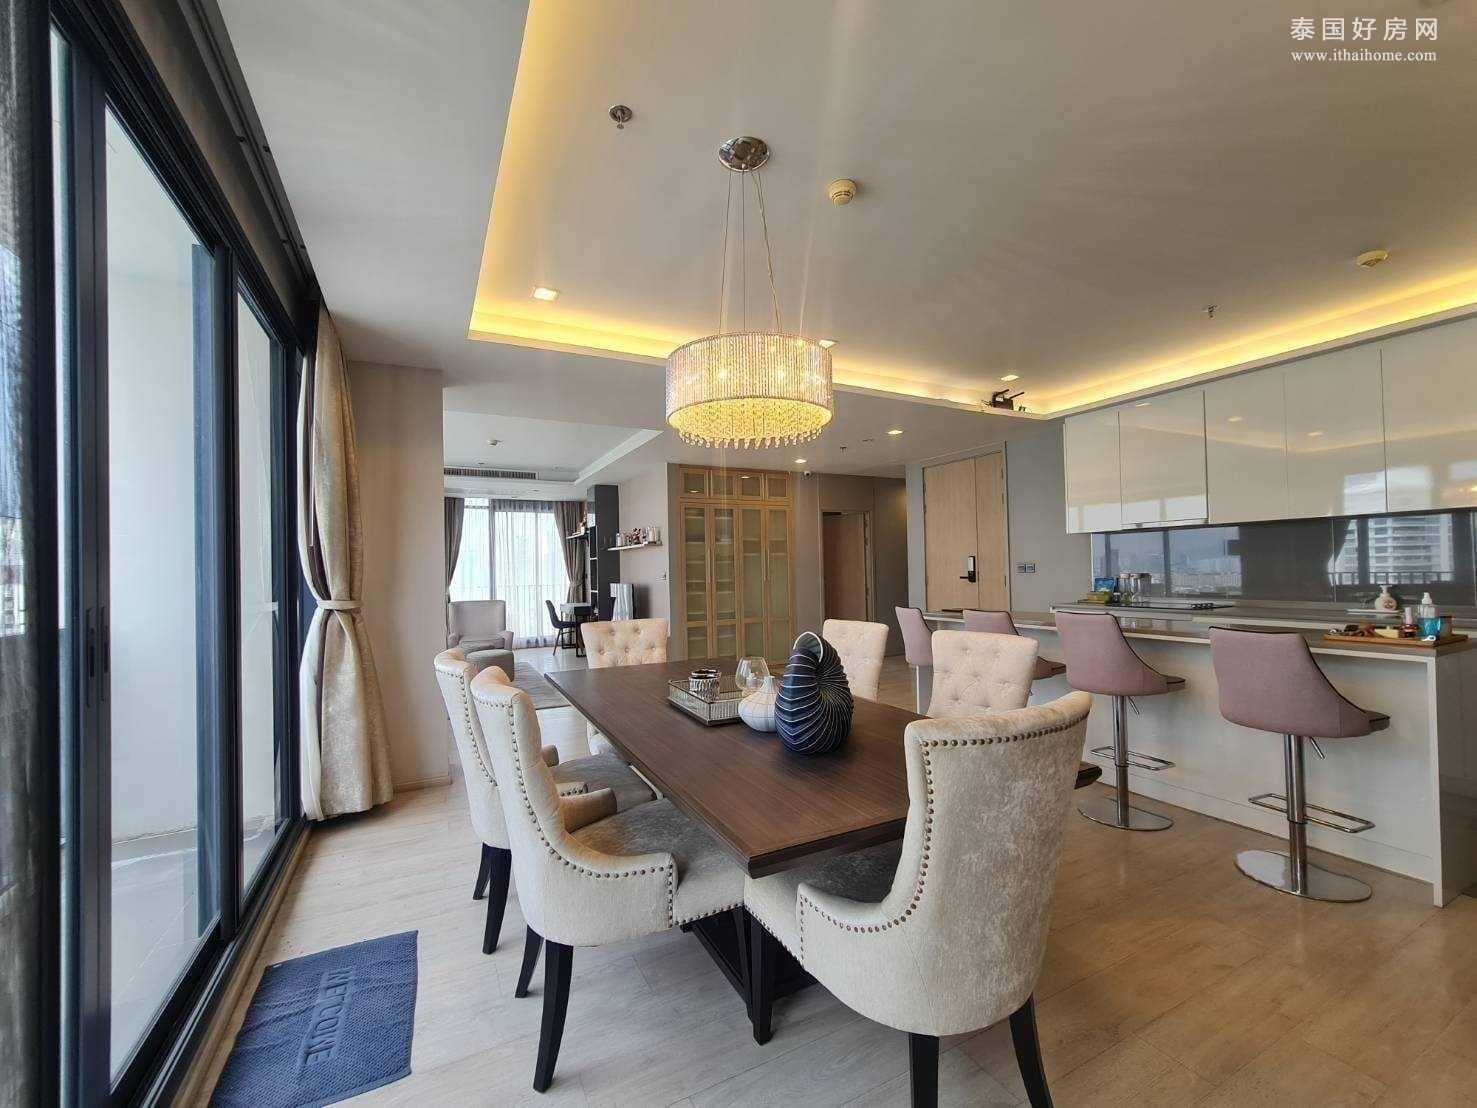 M Thonglor 公寓出售 顶层复式3卧166平米 3500万泰铢